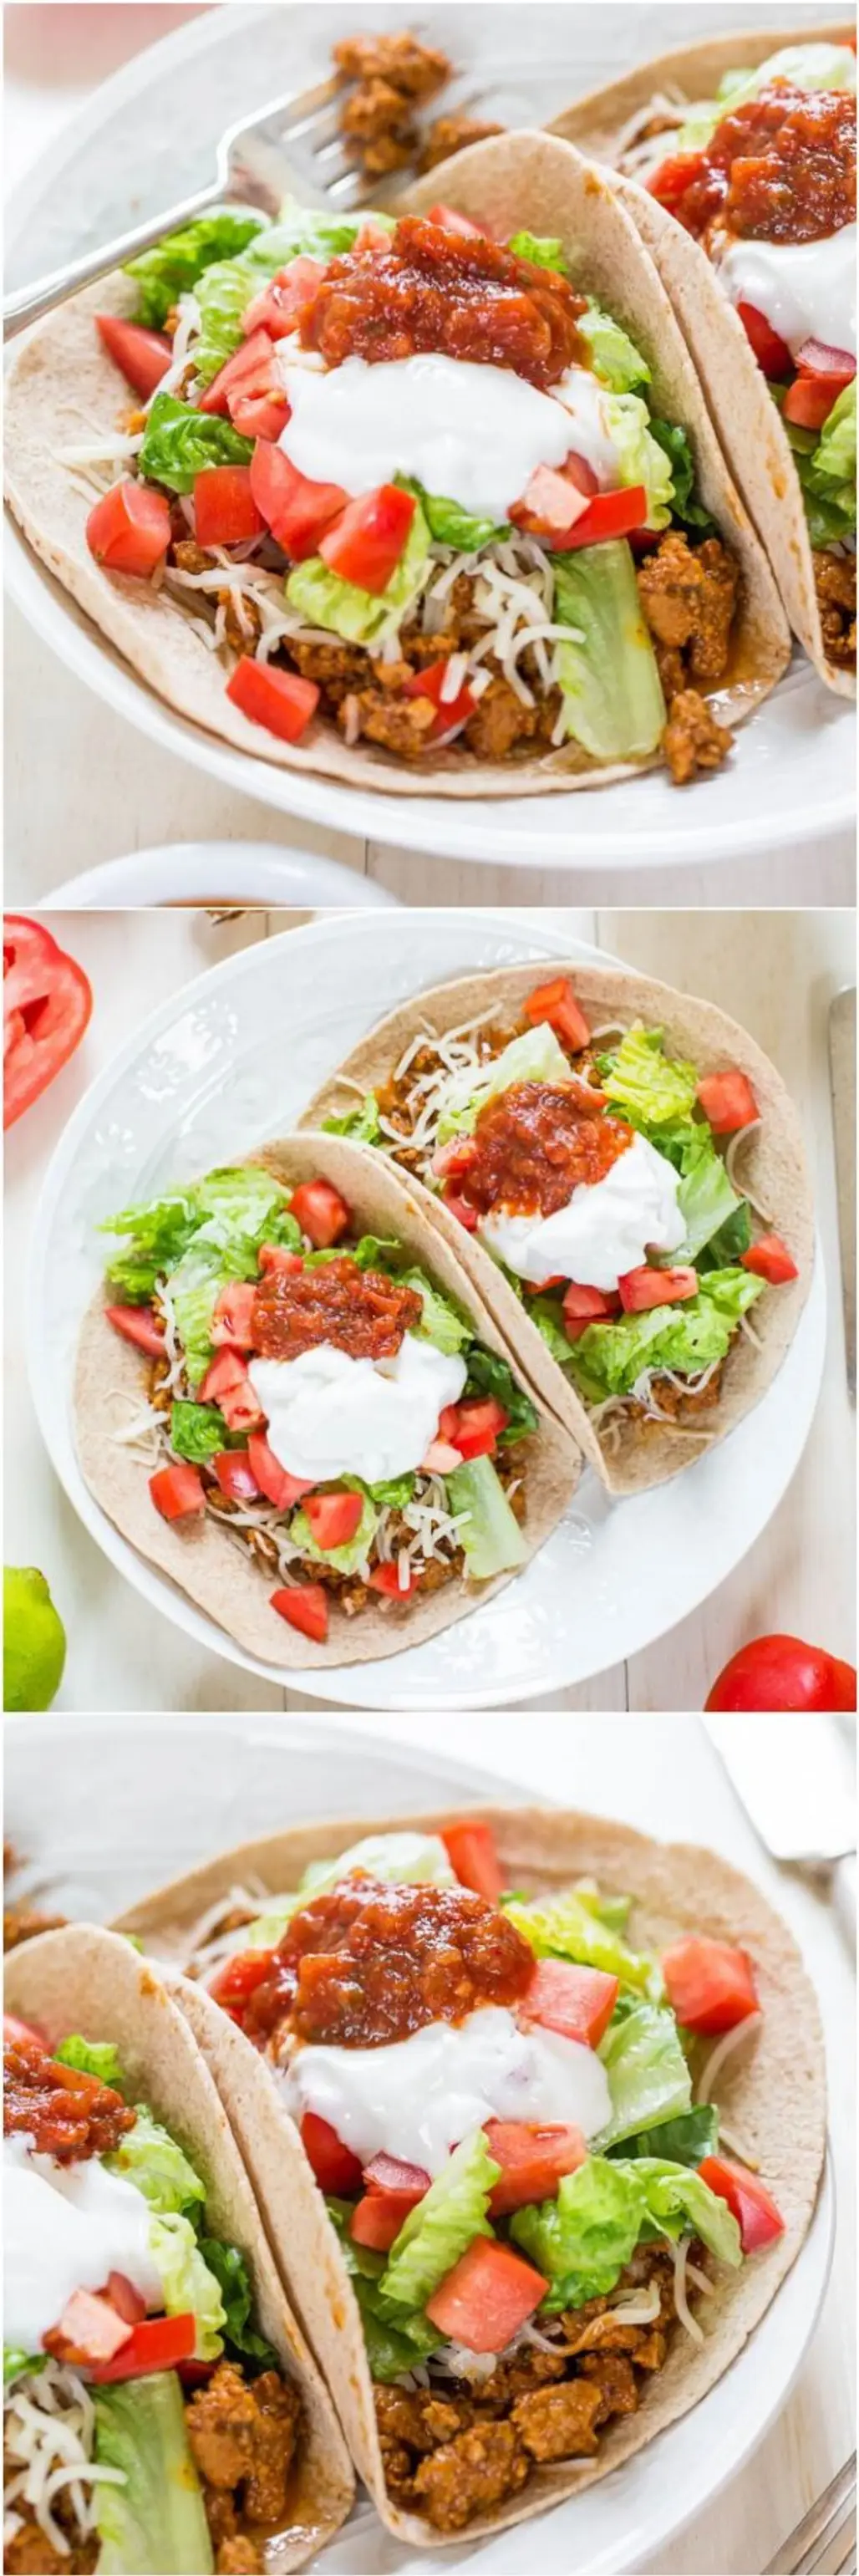 Healthy Vegan "Beefy" Tacos